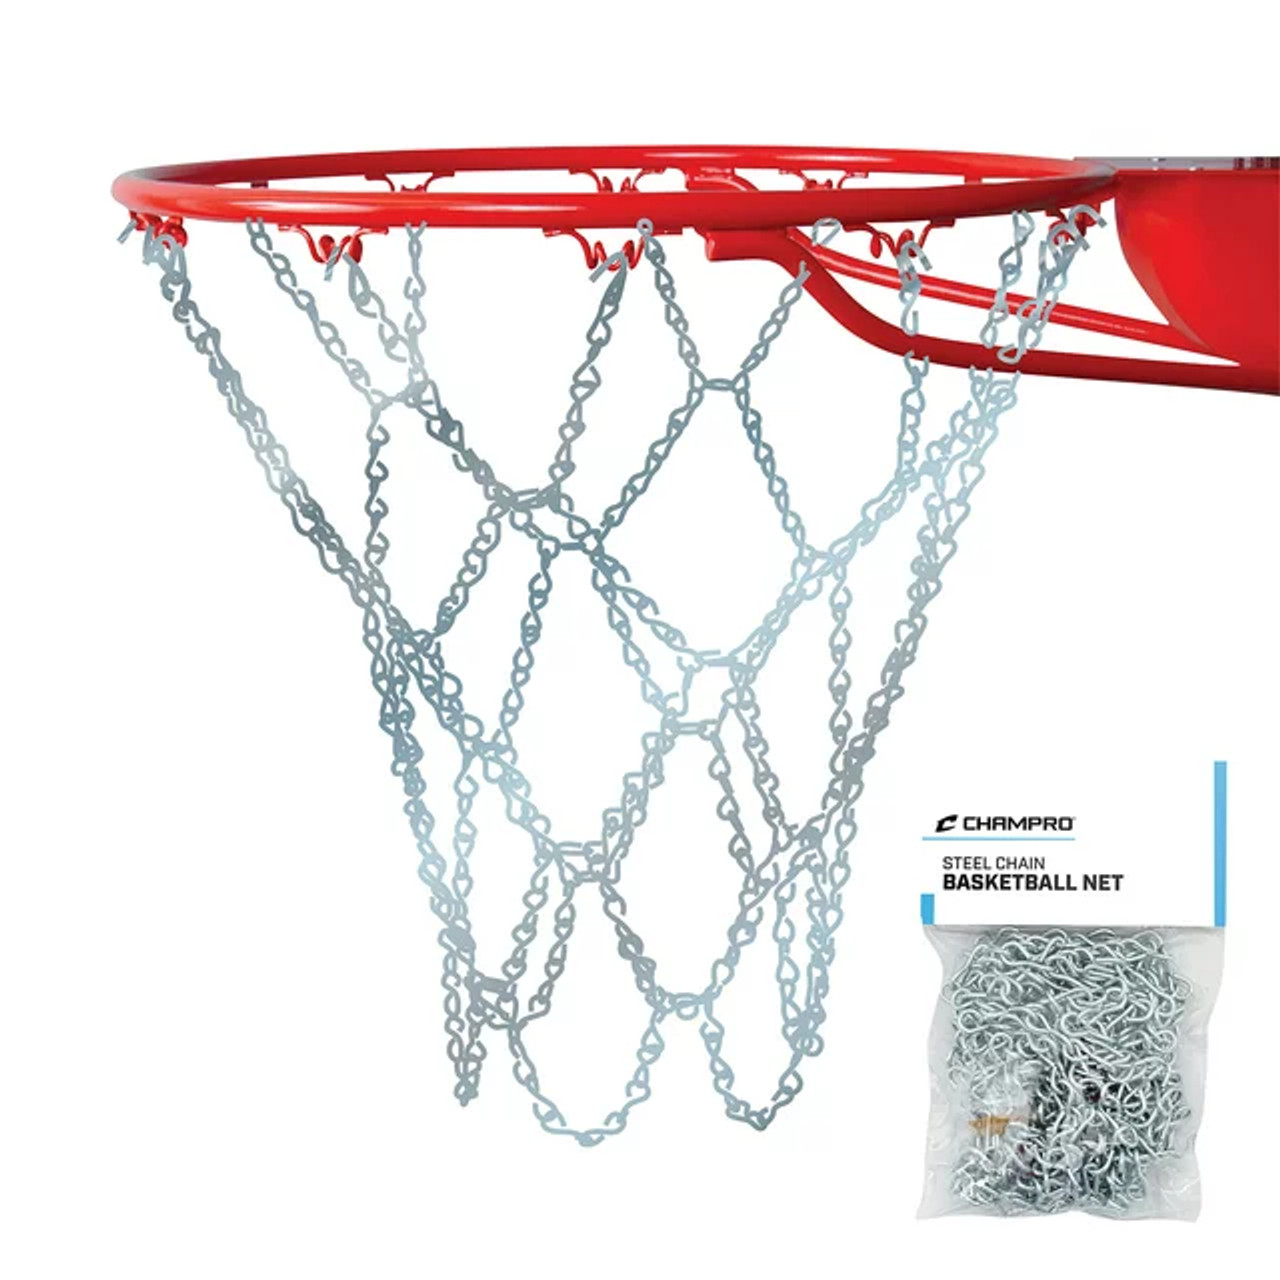 Champro Steel Chain Basketball Net